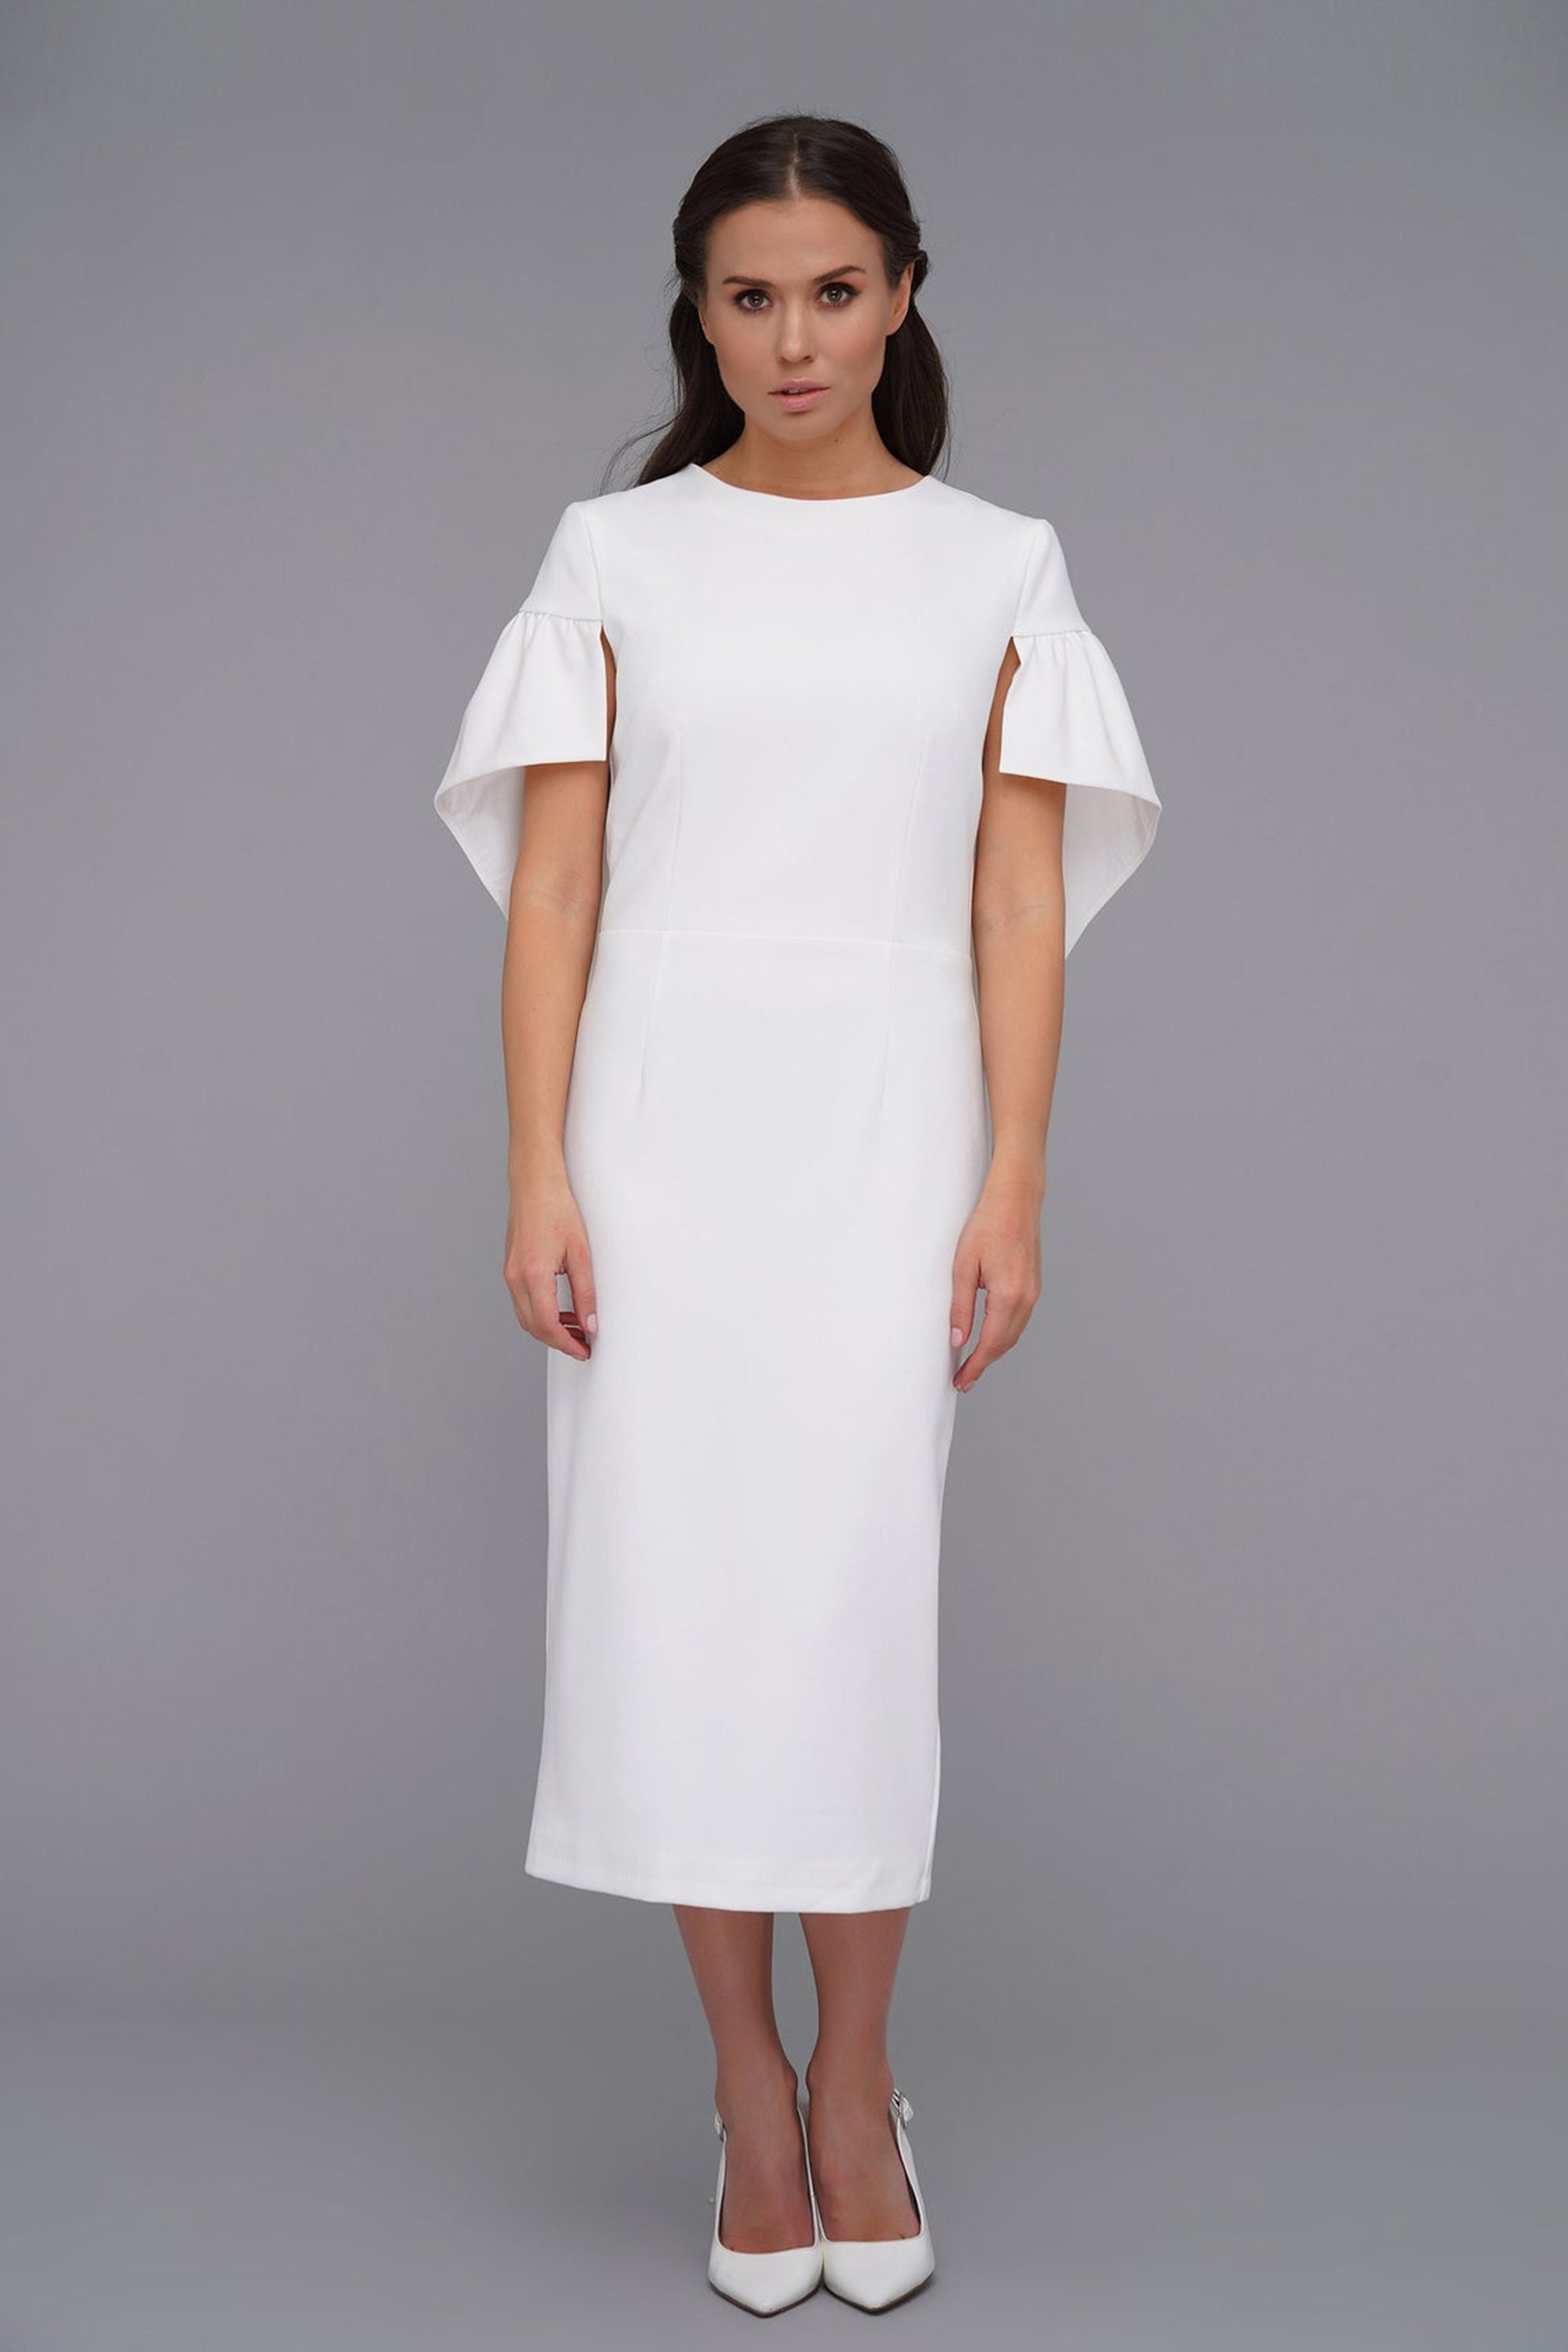 White cape pencil dress Elegant simple short wedding dress | Etsy